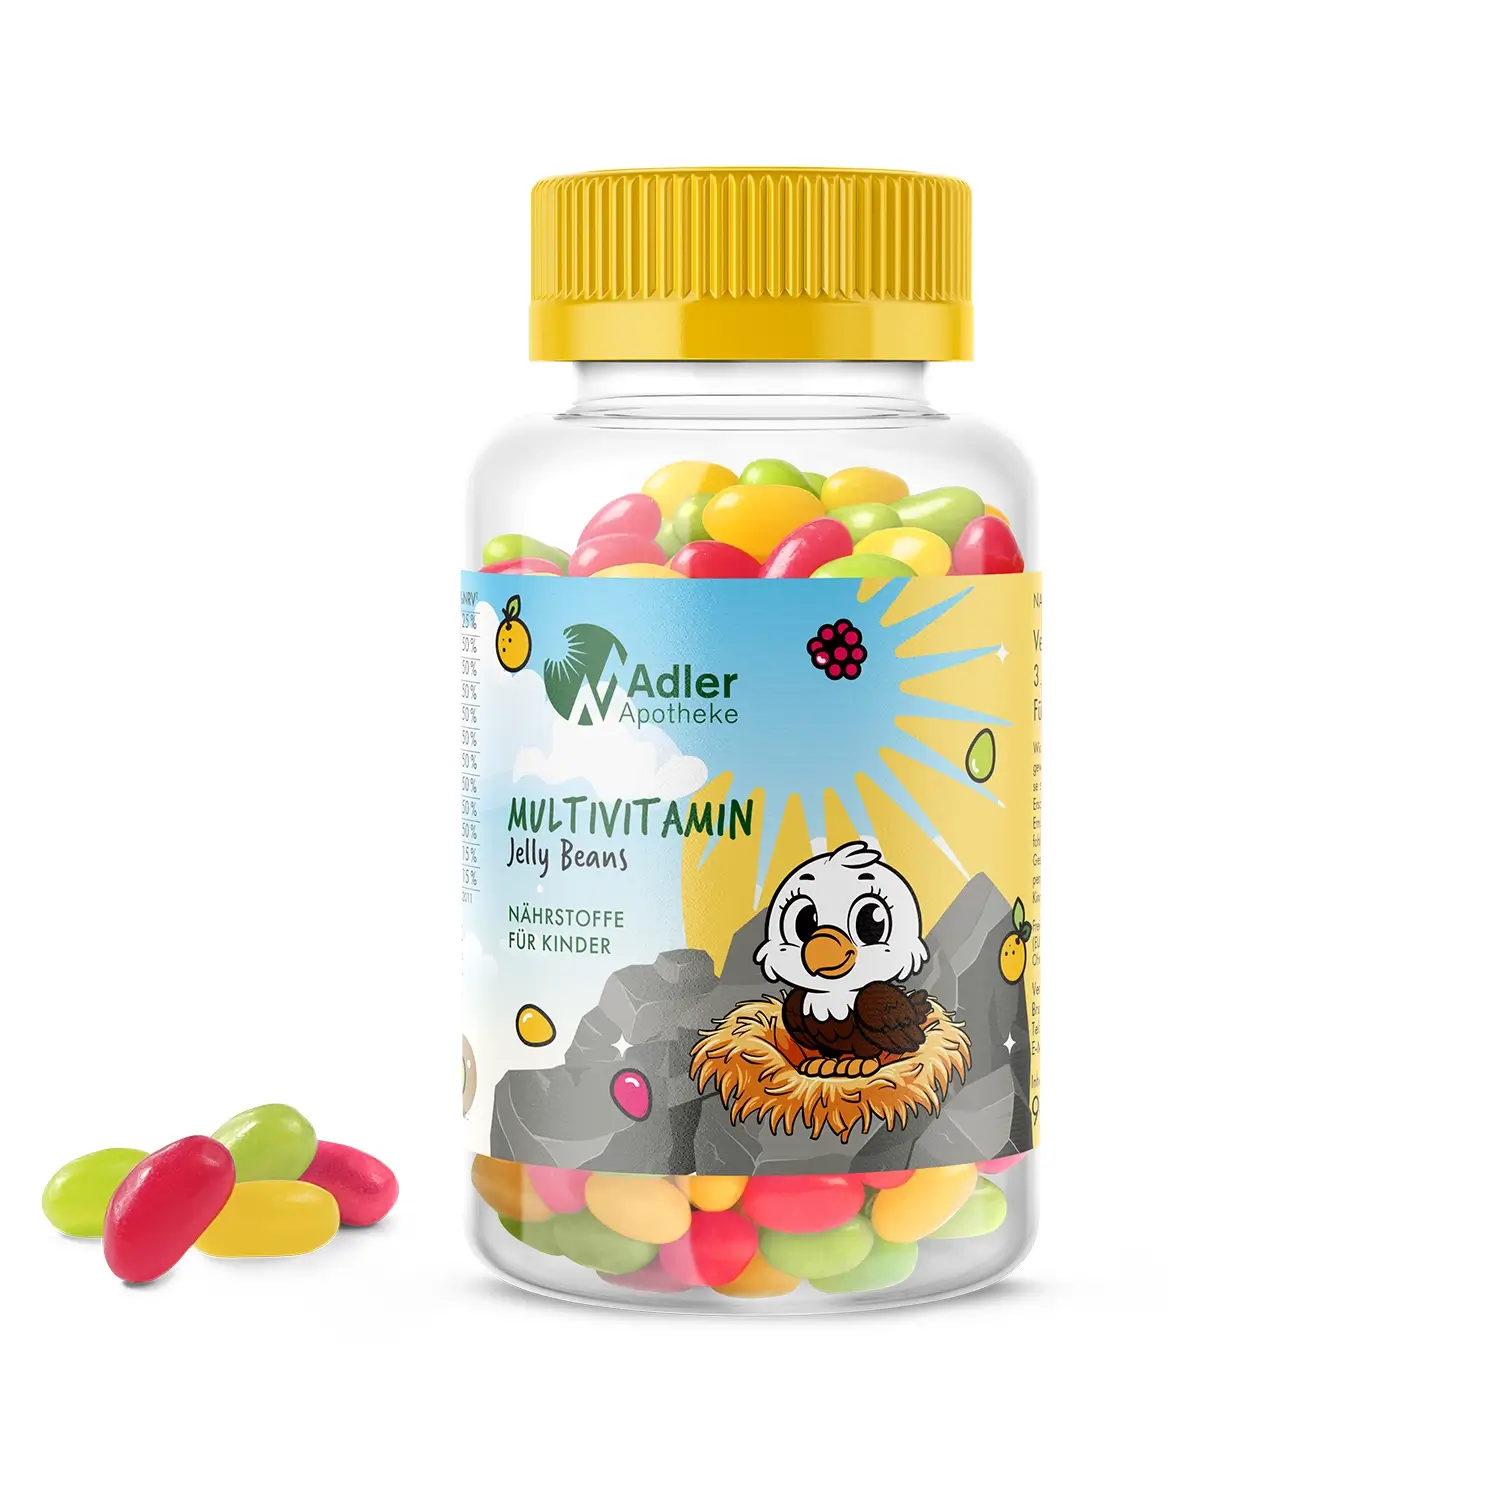 Multivitamin Jelly Beans